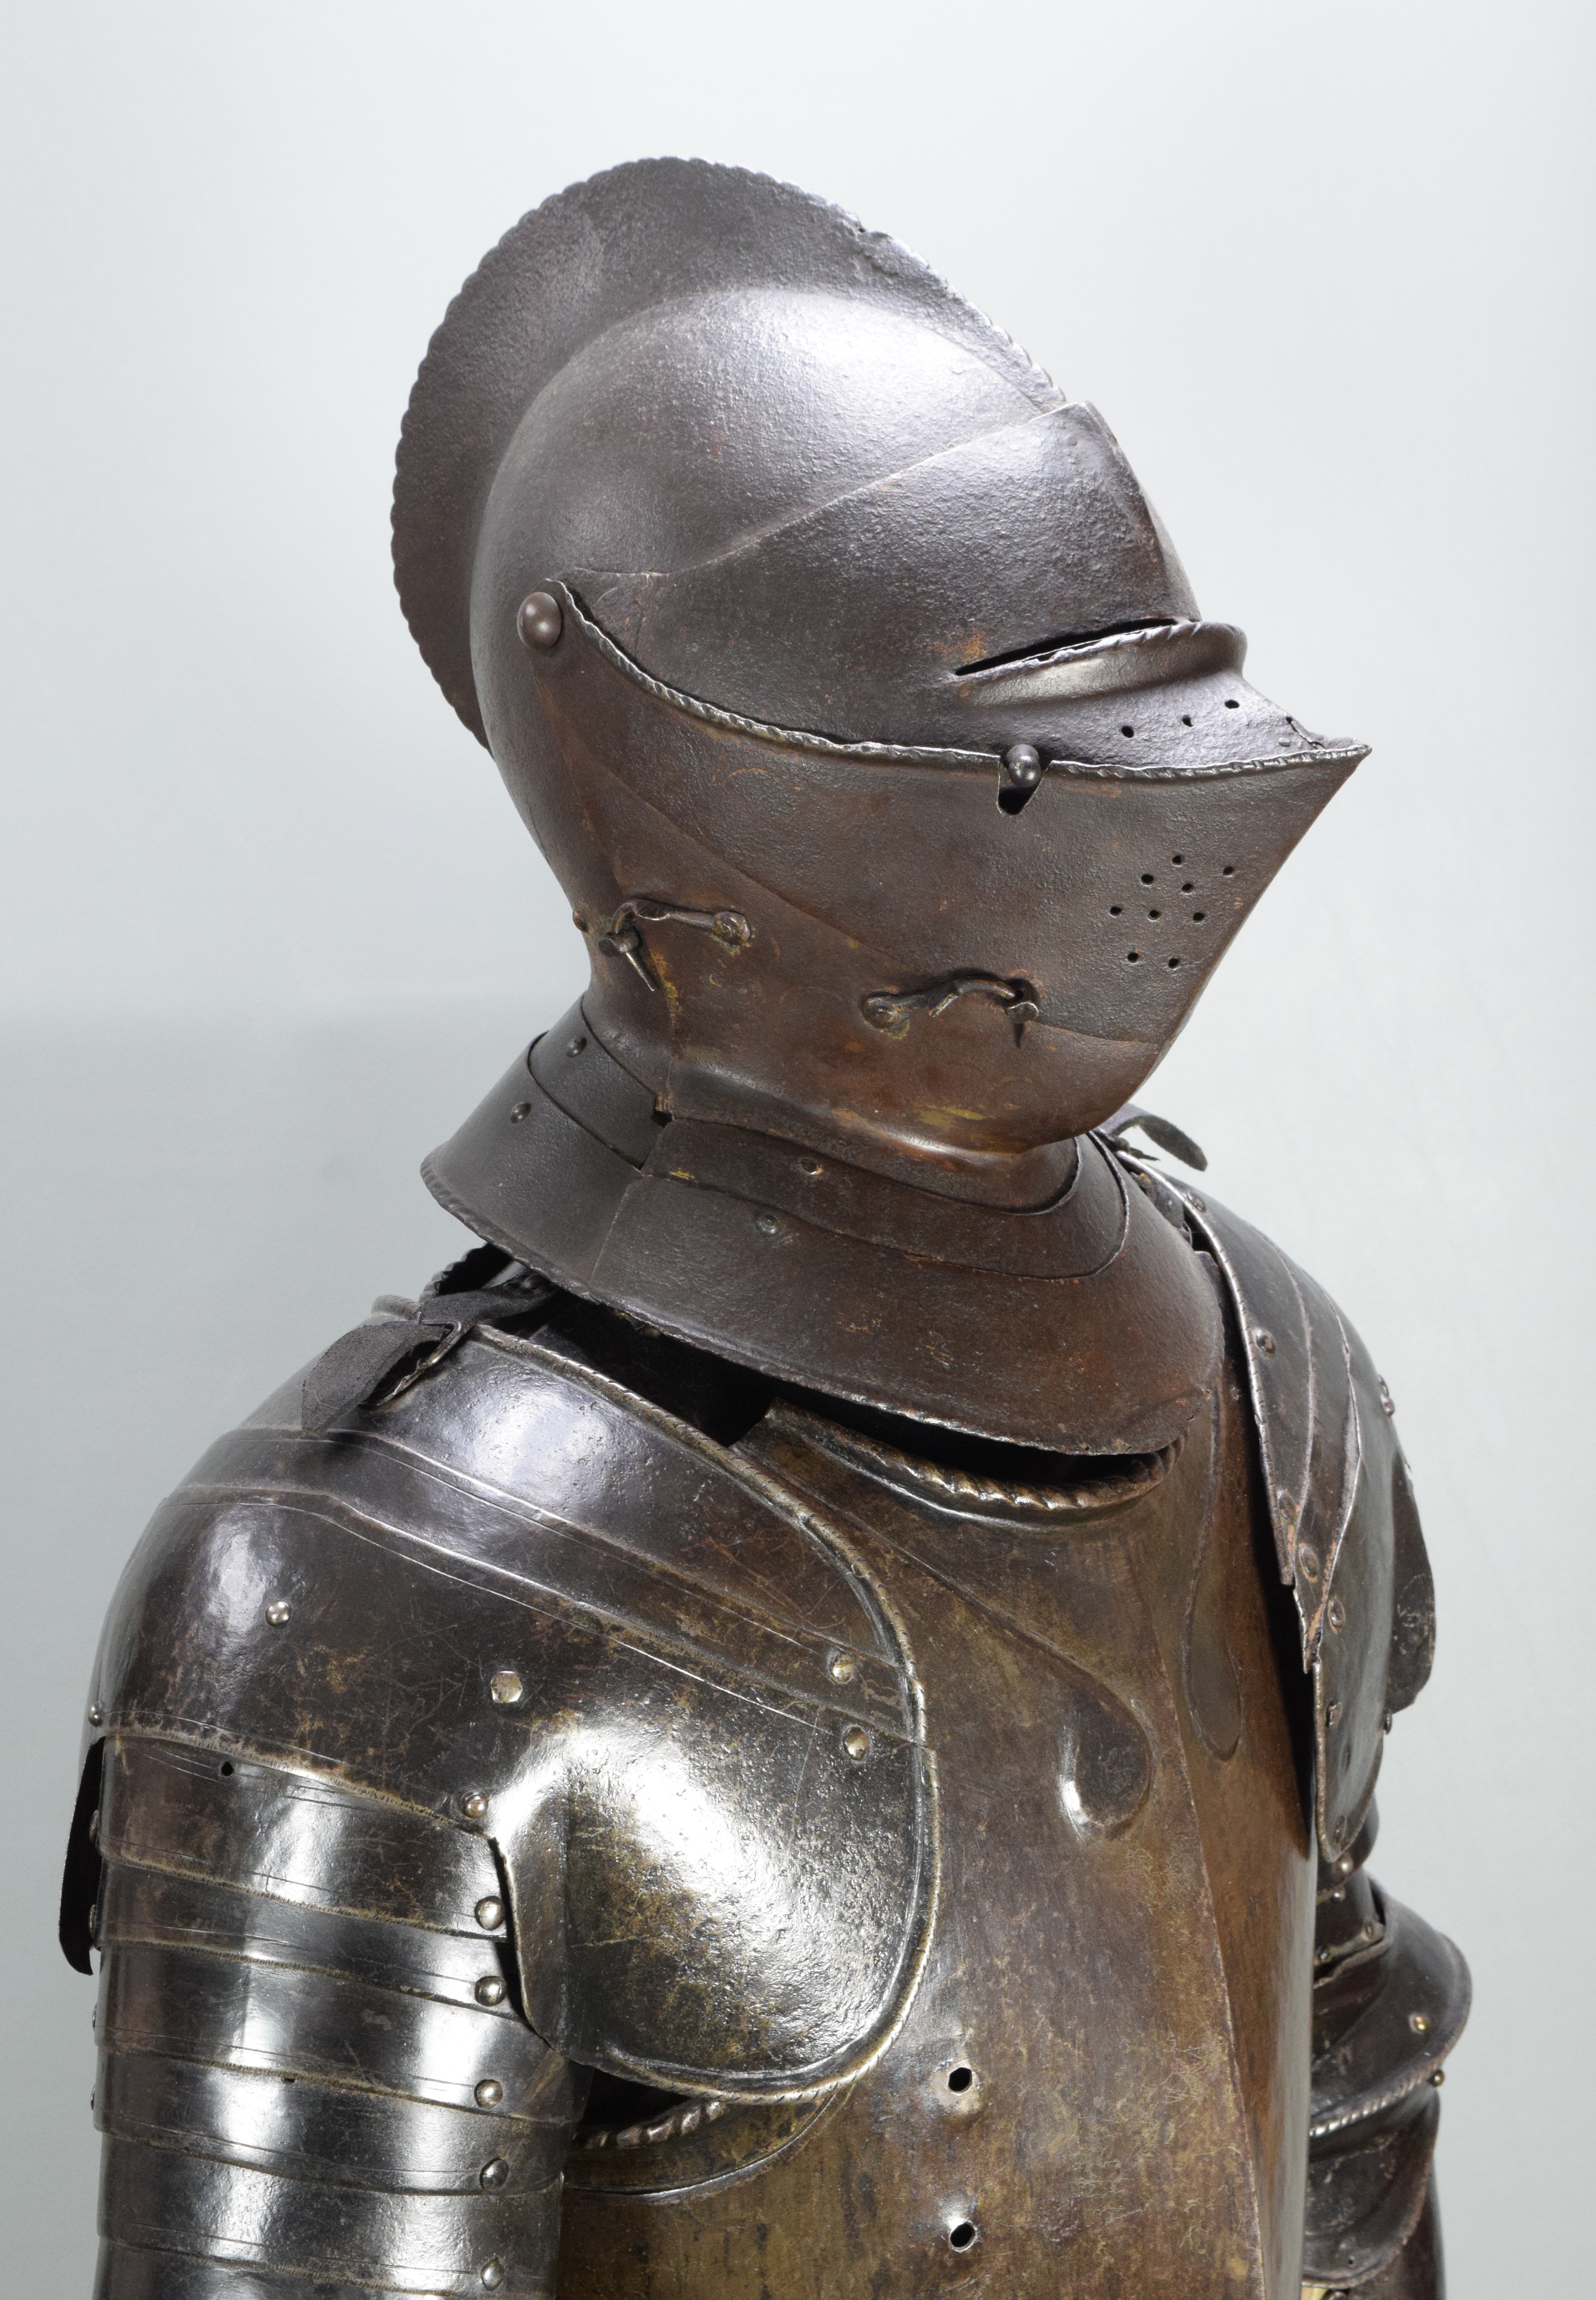 Italian, Flemish or English Three-quarter Suit - A-1-grey-helmet-right-side